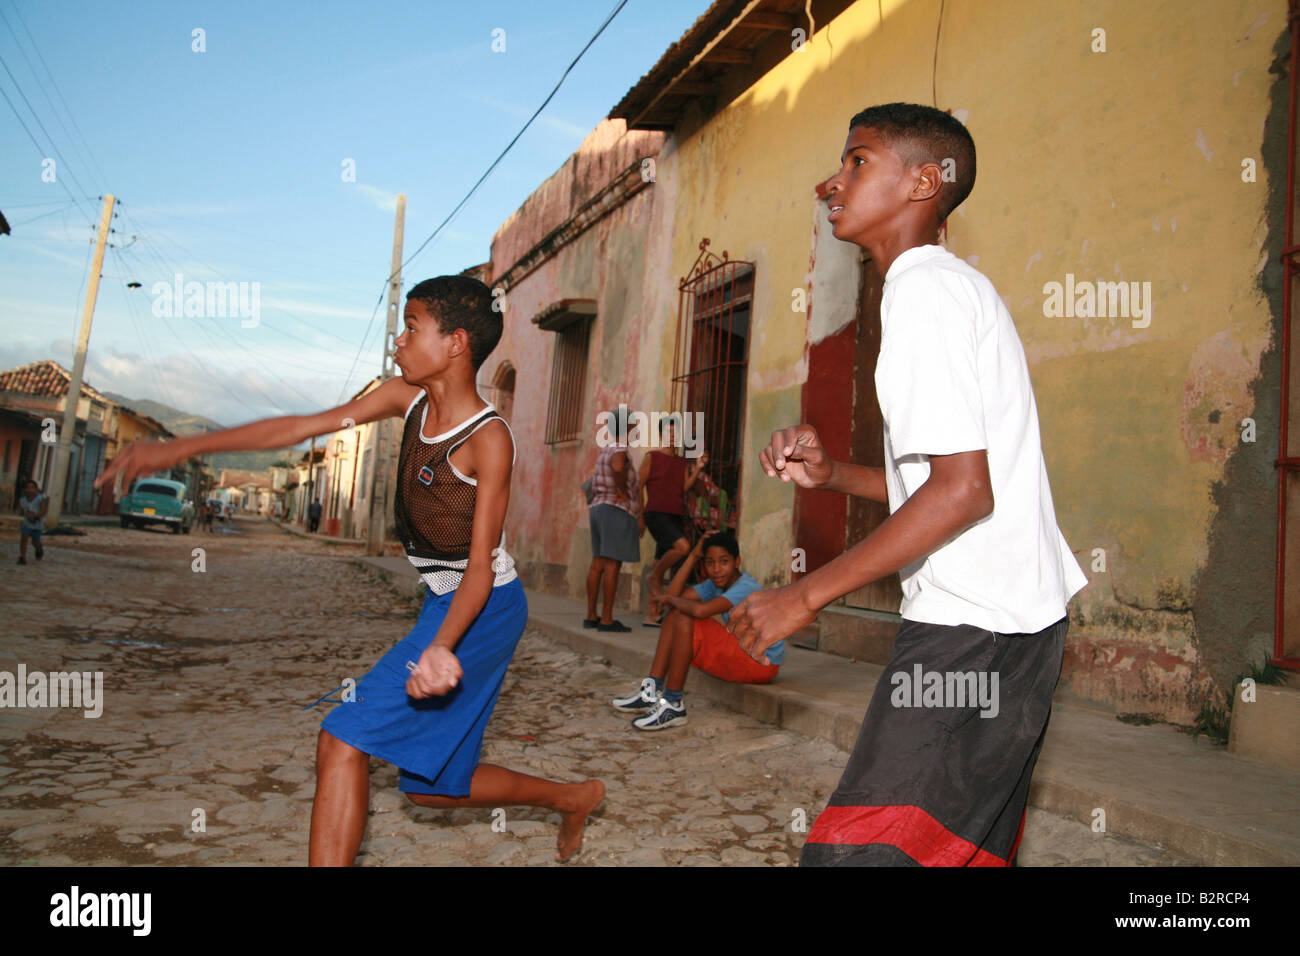 Children playing baseball on a street in Trinidad Sancti Spíritus Province Cuba Latin America Stock Photo